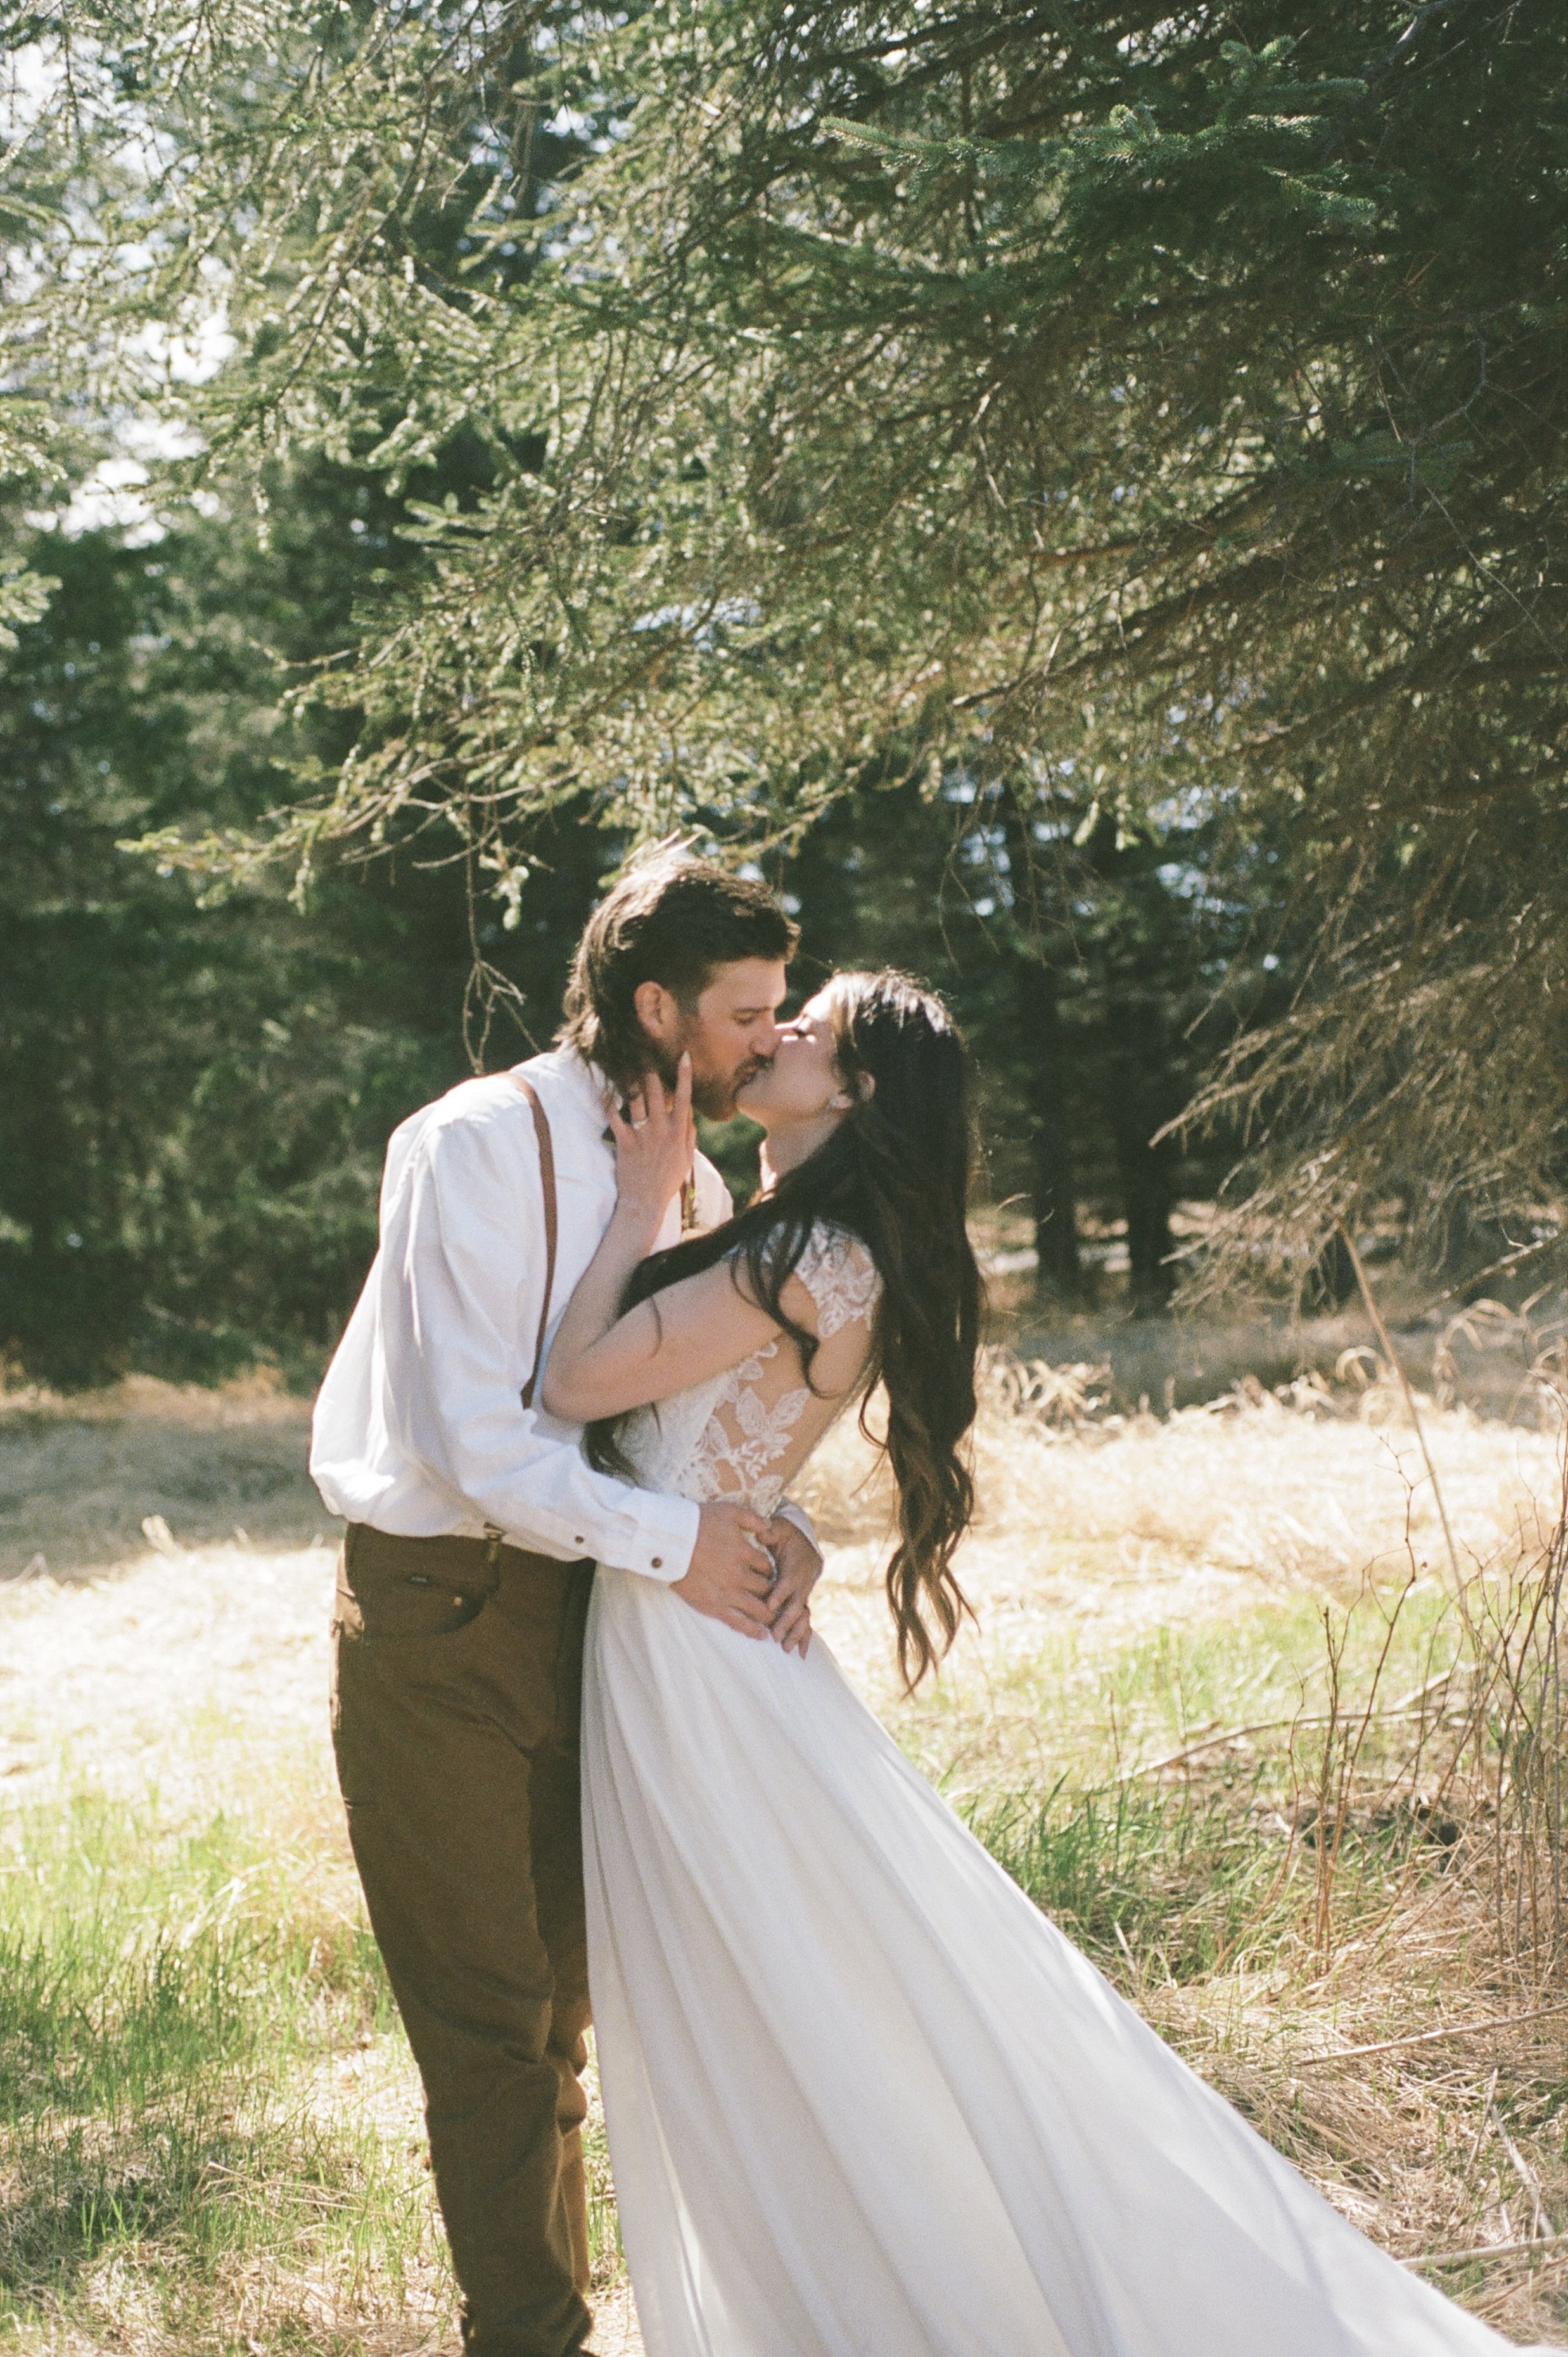 INTIMATE BEACH WEDDING | HOMER, ALASKA FILM PHOTOGRAPHER